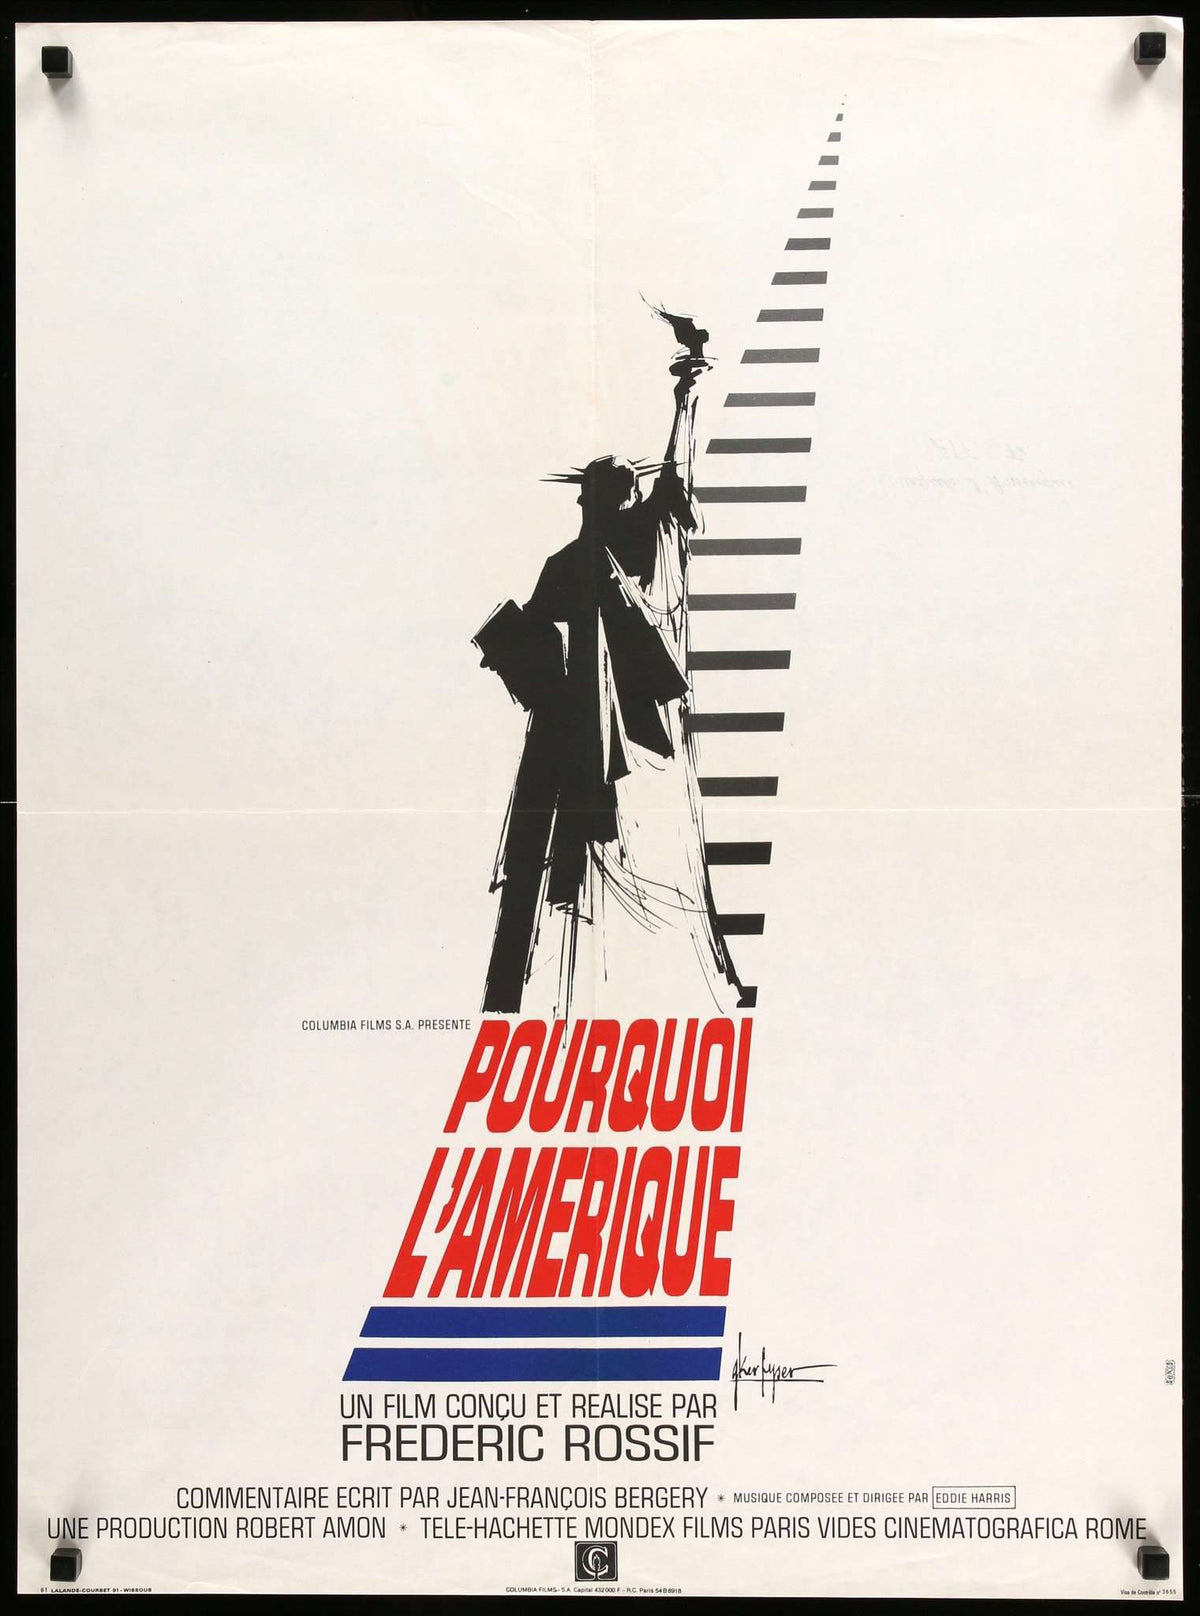 Why America (1969) original movie poster for sale at Original Film Art